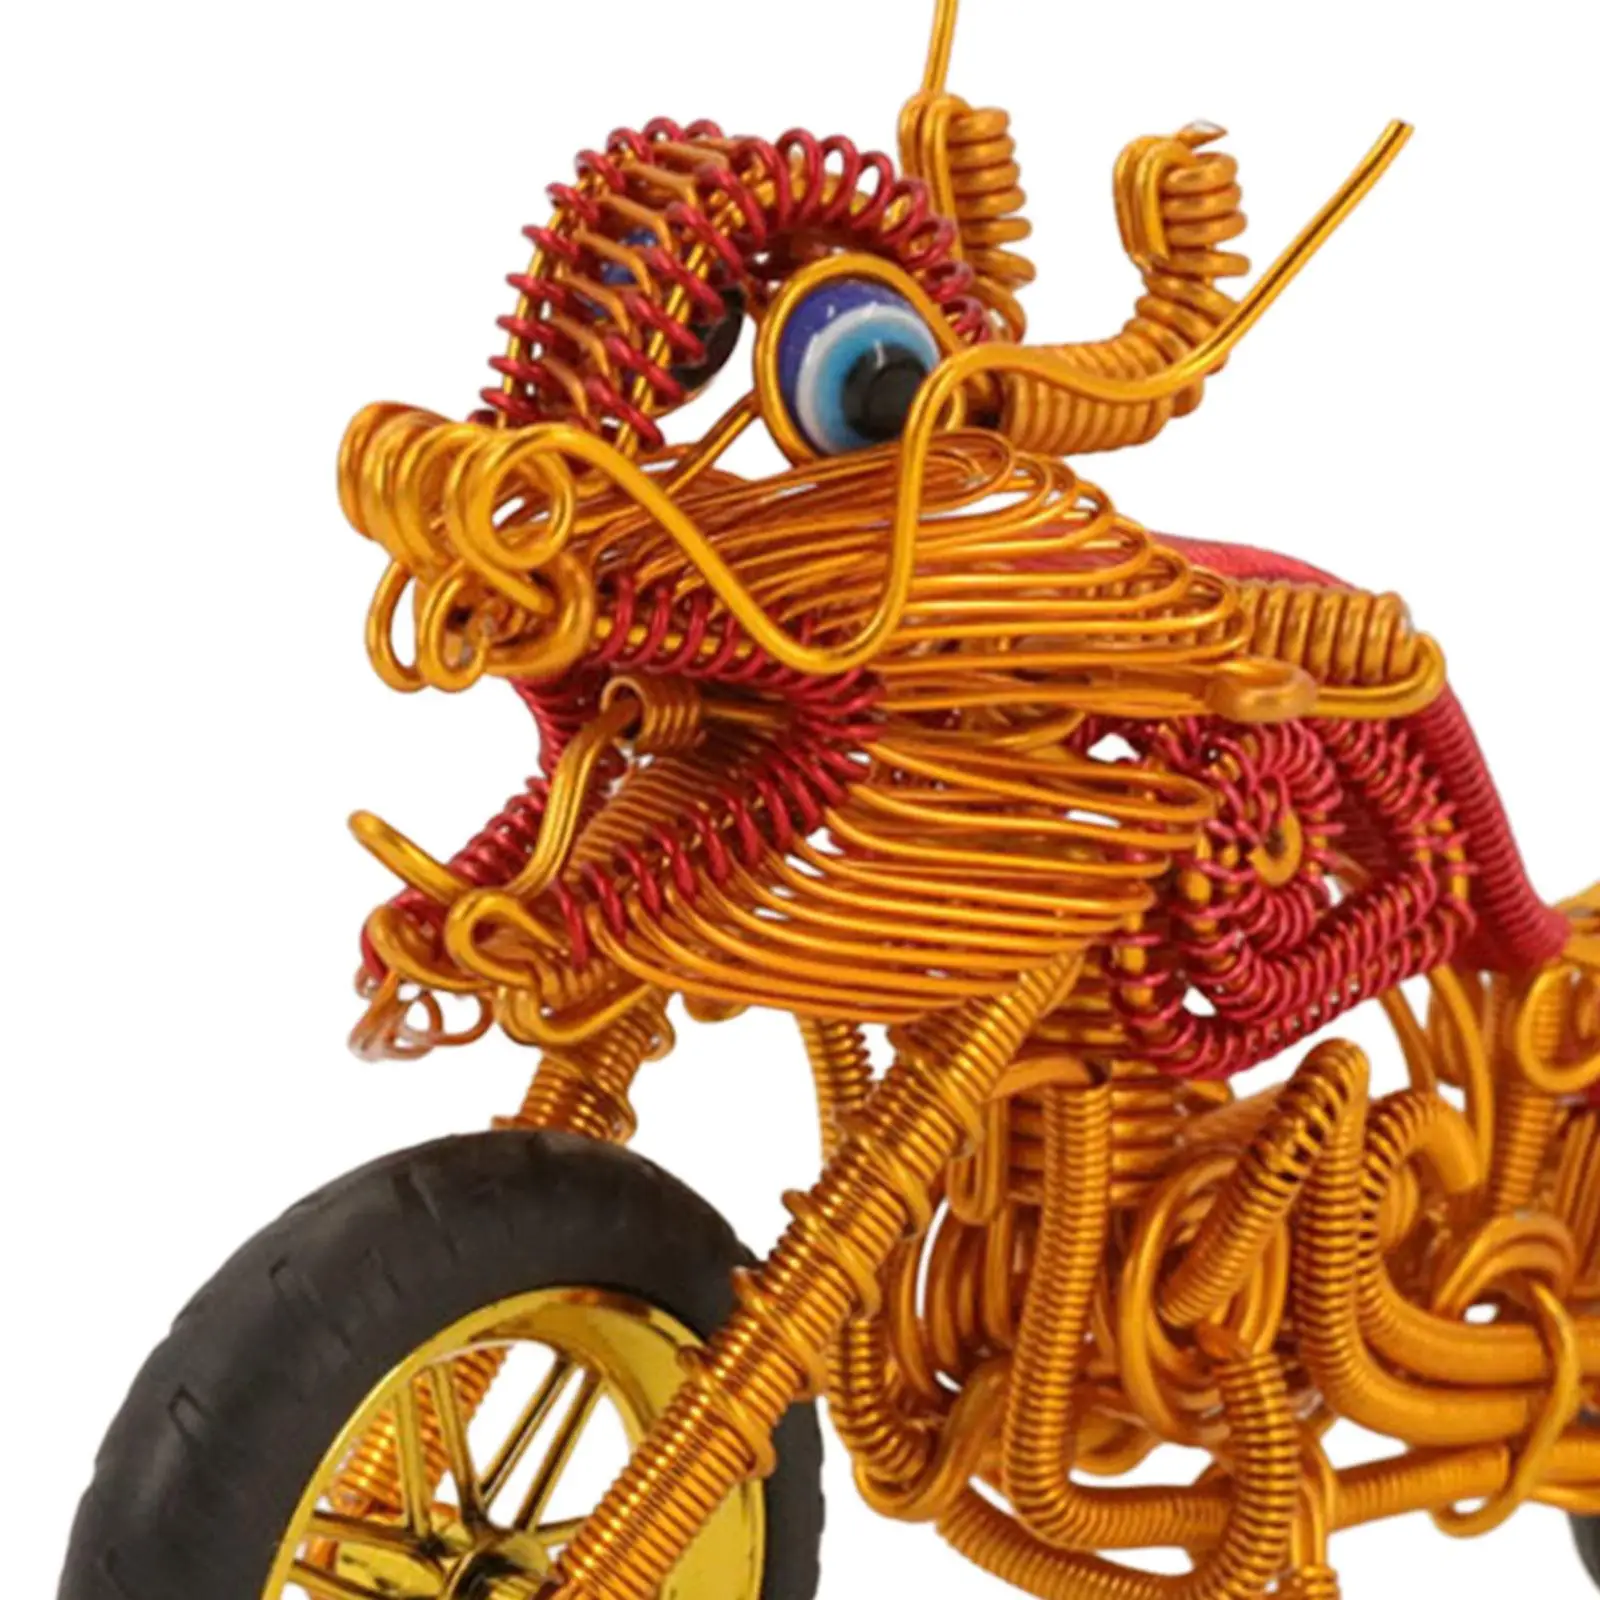 Motorcycle Model Metal Retro Artwork Toy Decoration for Office Desktop Cafe